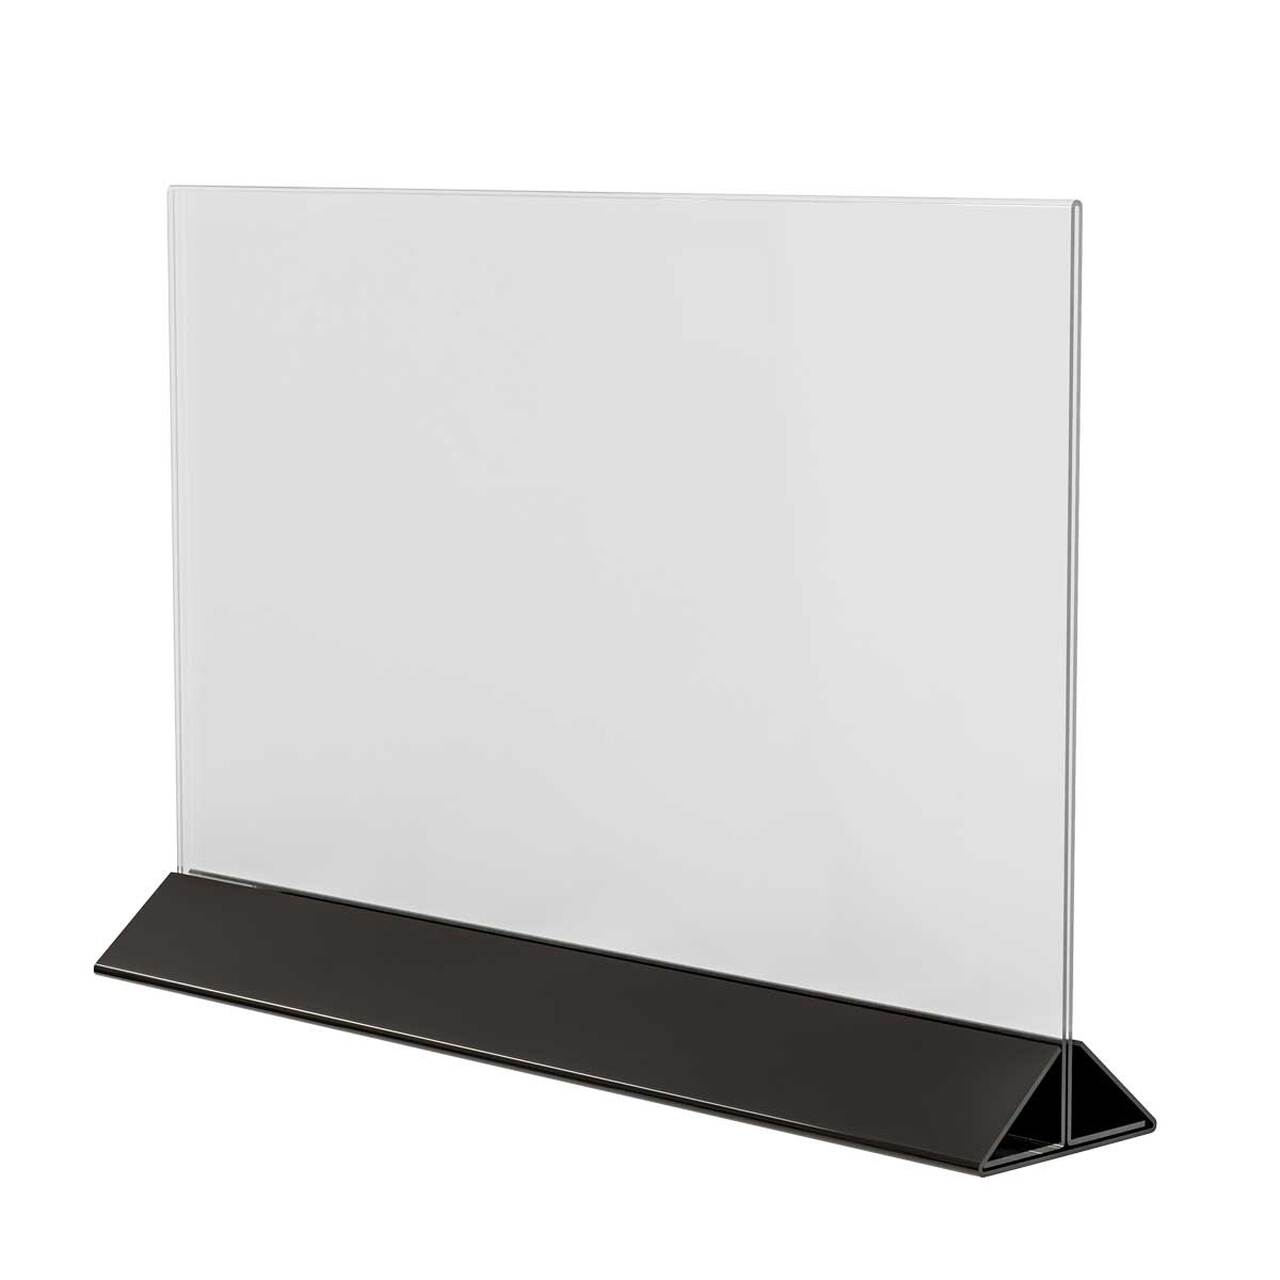 Suport meniu tip T, transparent, cu bază din plexiglas negru, A4(210x297mm), Landscape